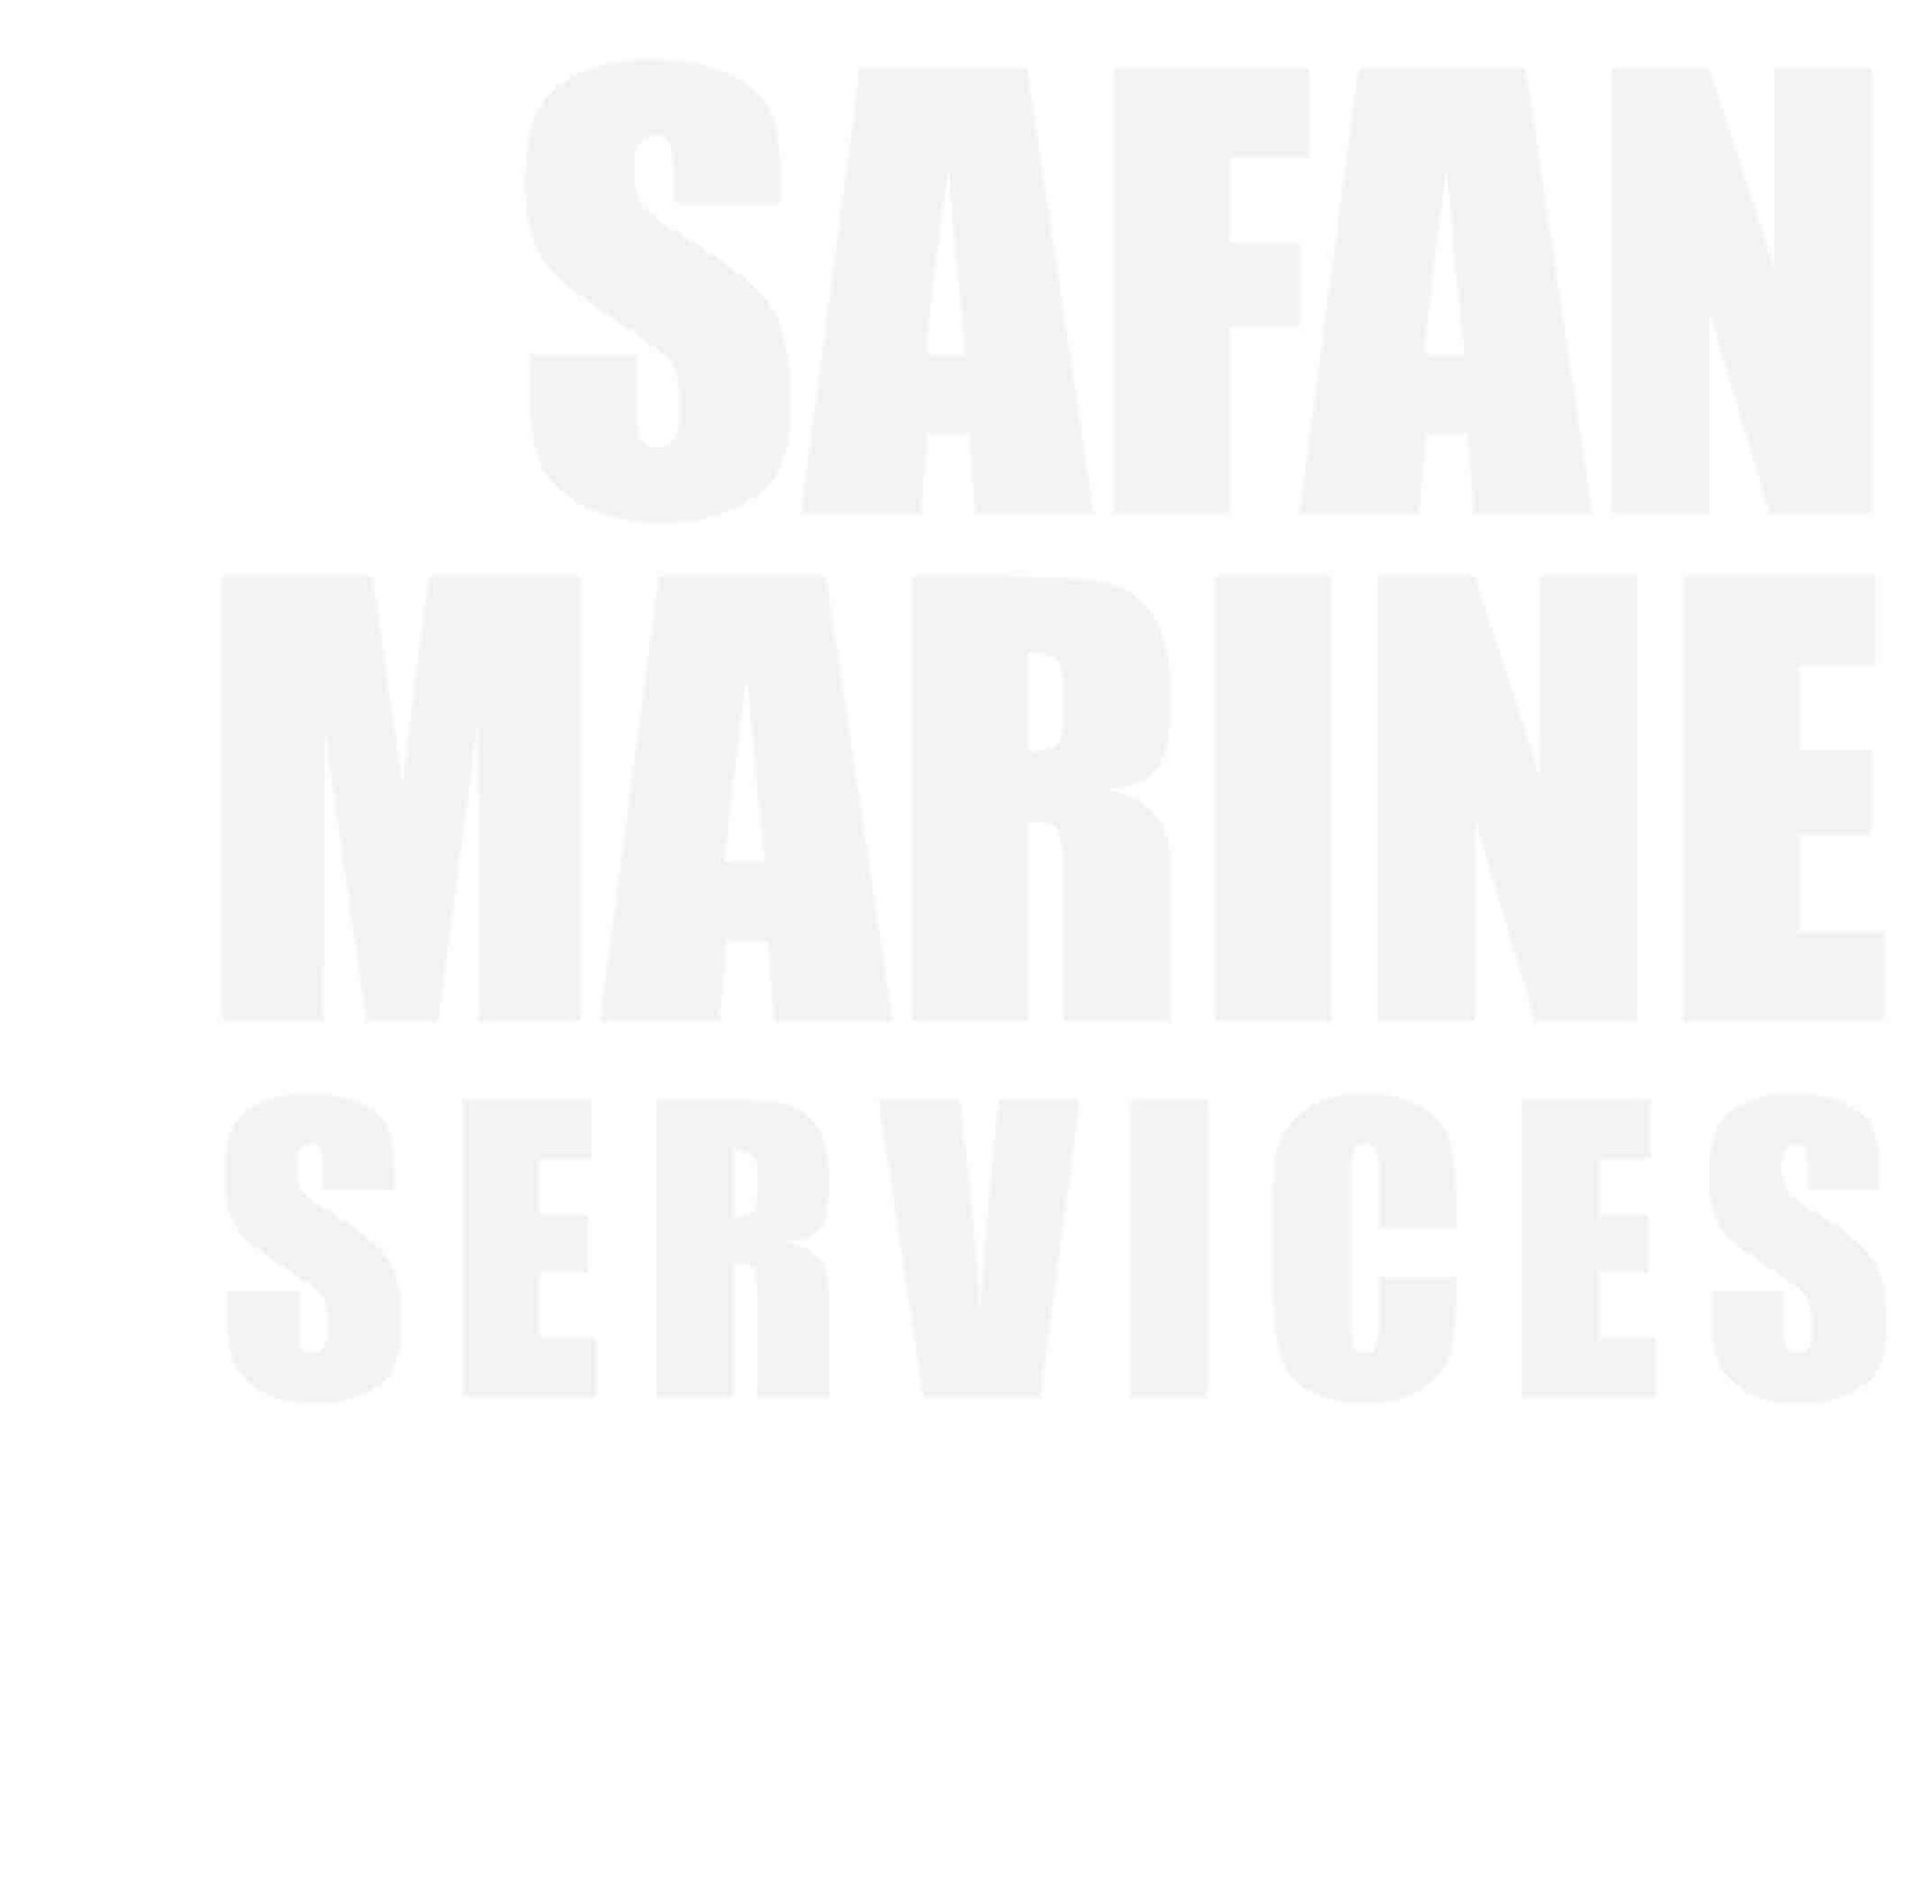 Safan Marine Services